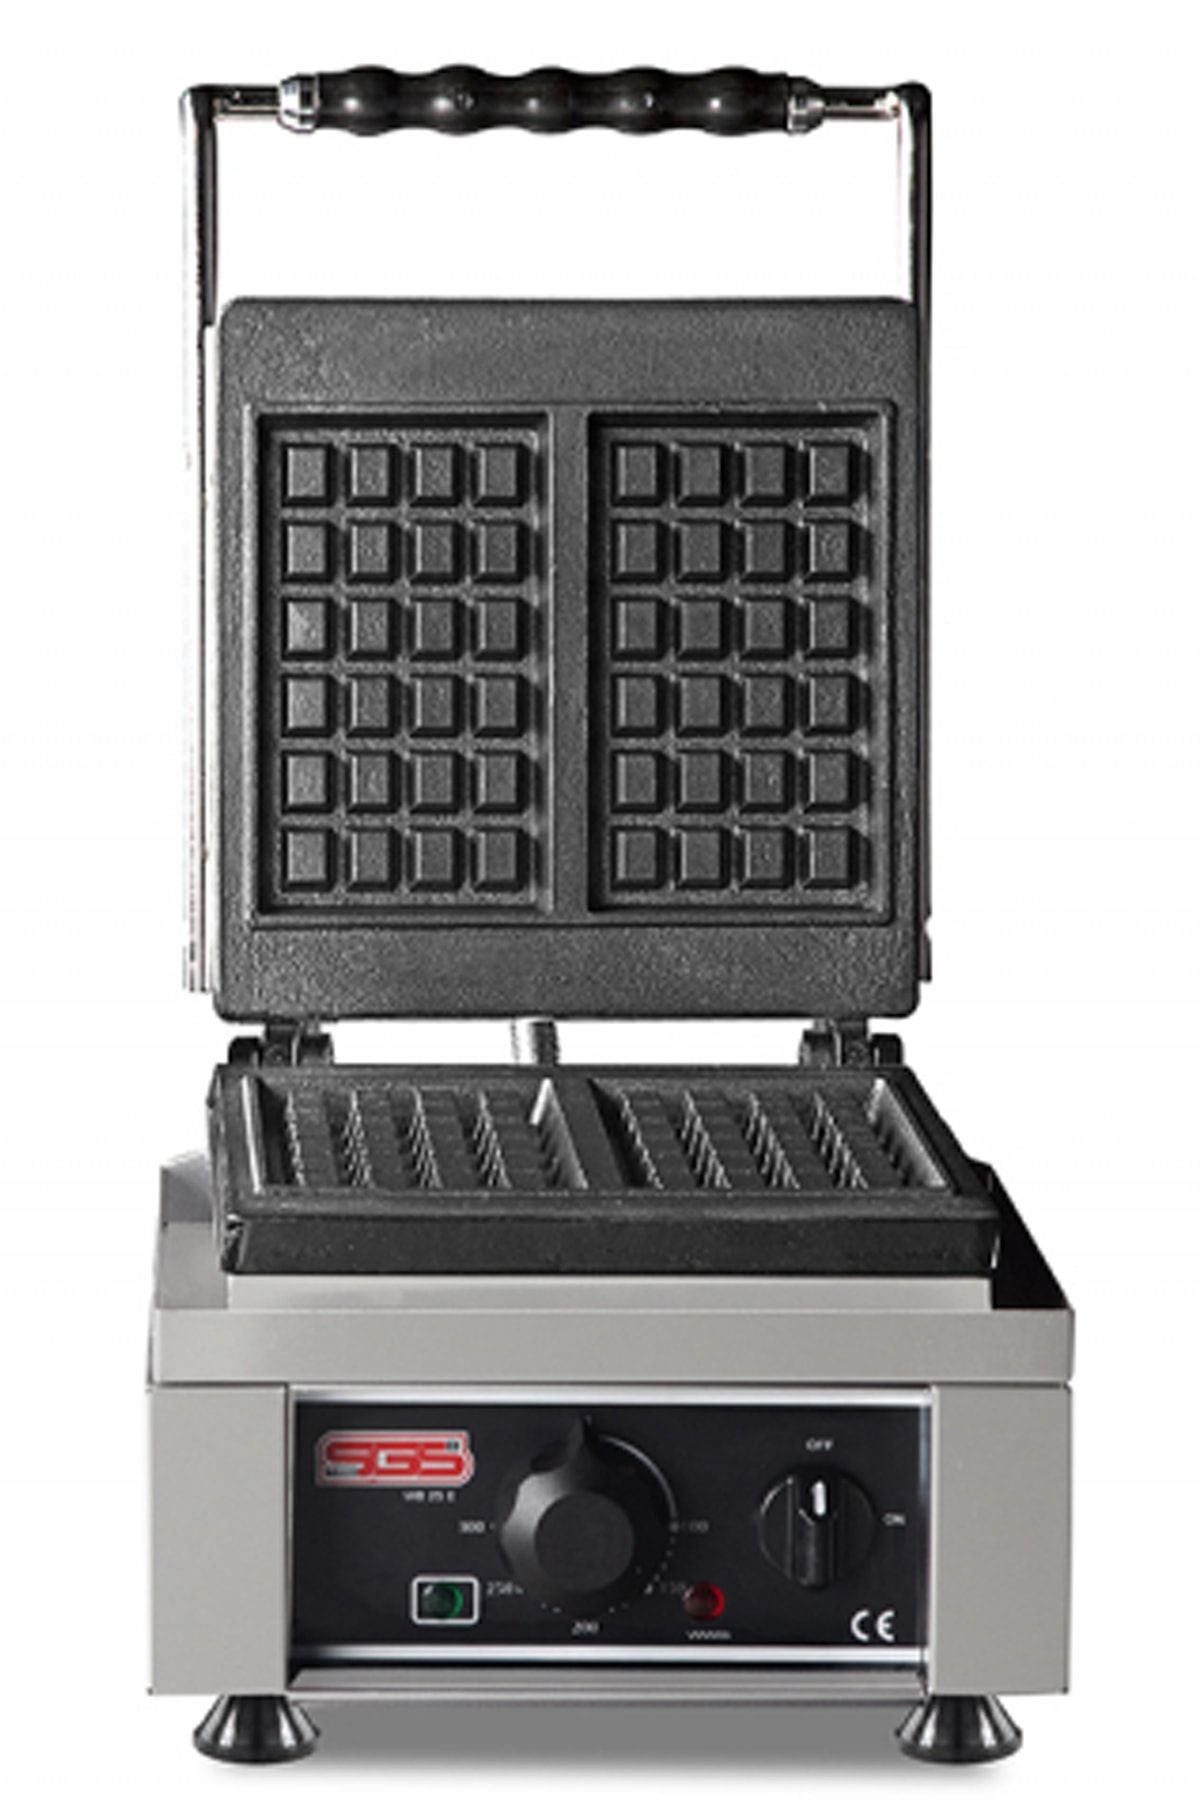 SGS OVEN Sgs Waffle Makinesi Wk 25 E Endüstriyel Profesyonel